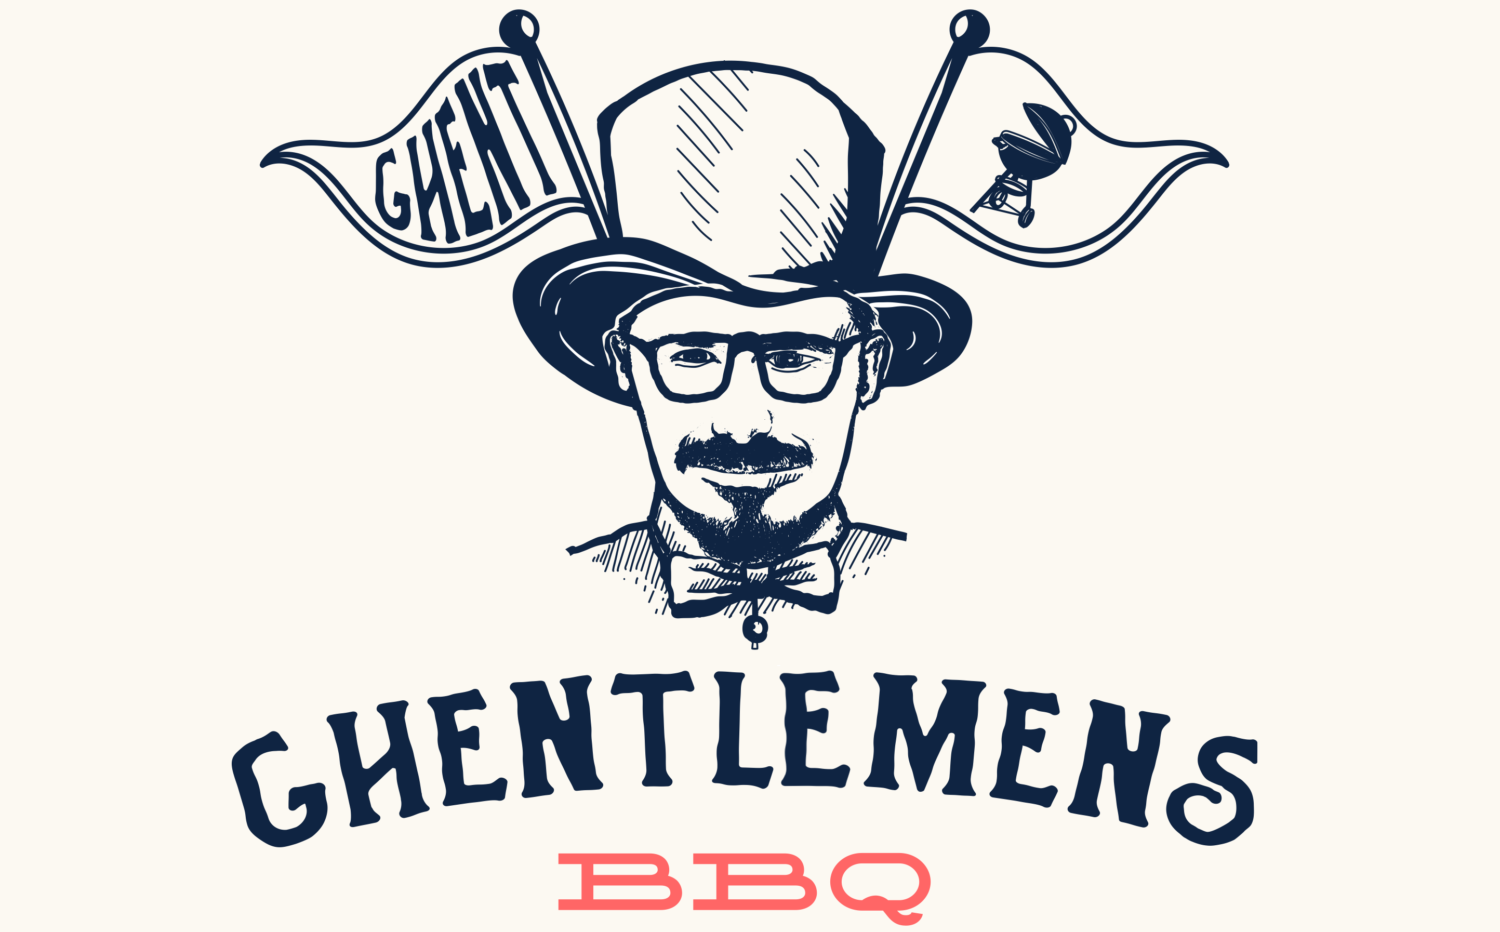 GHENTlemens BBQ Logo